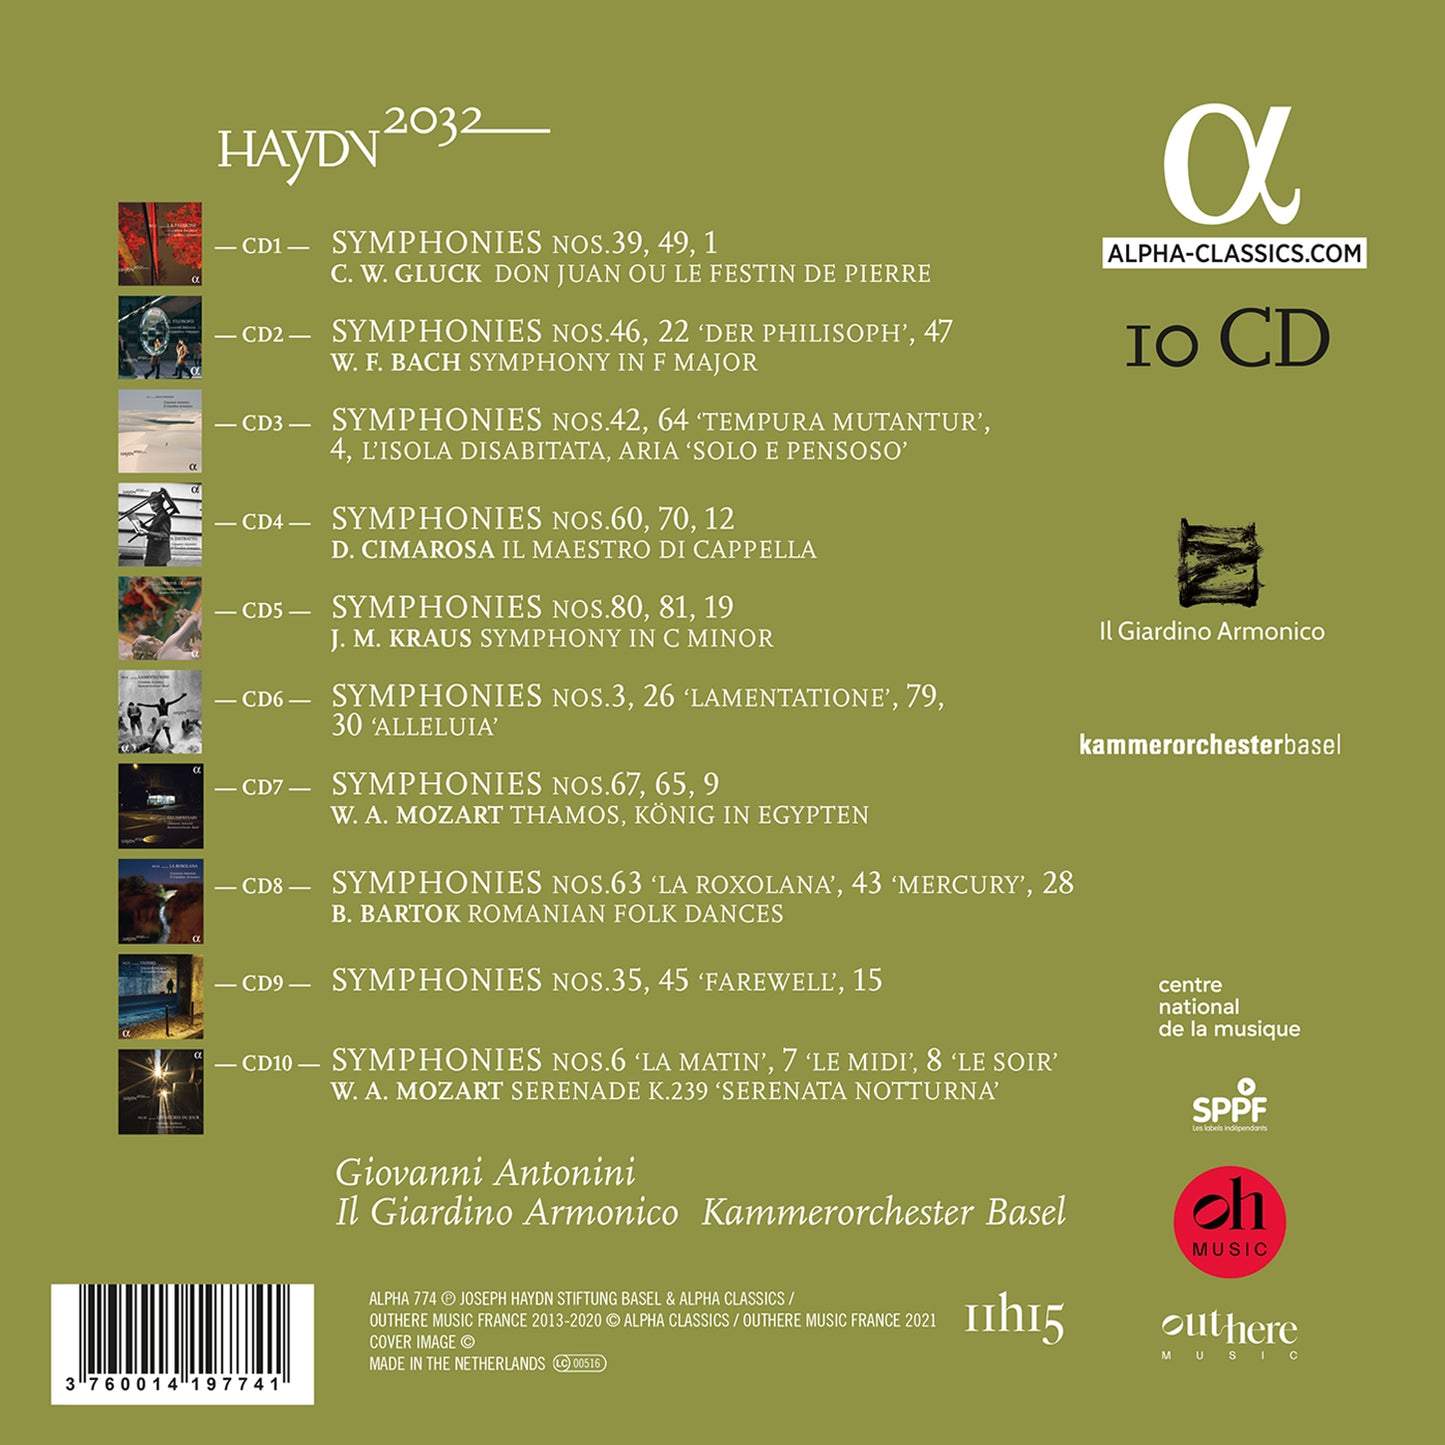 Haydn 2032, Vol. 1-10: The Symphonies